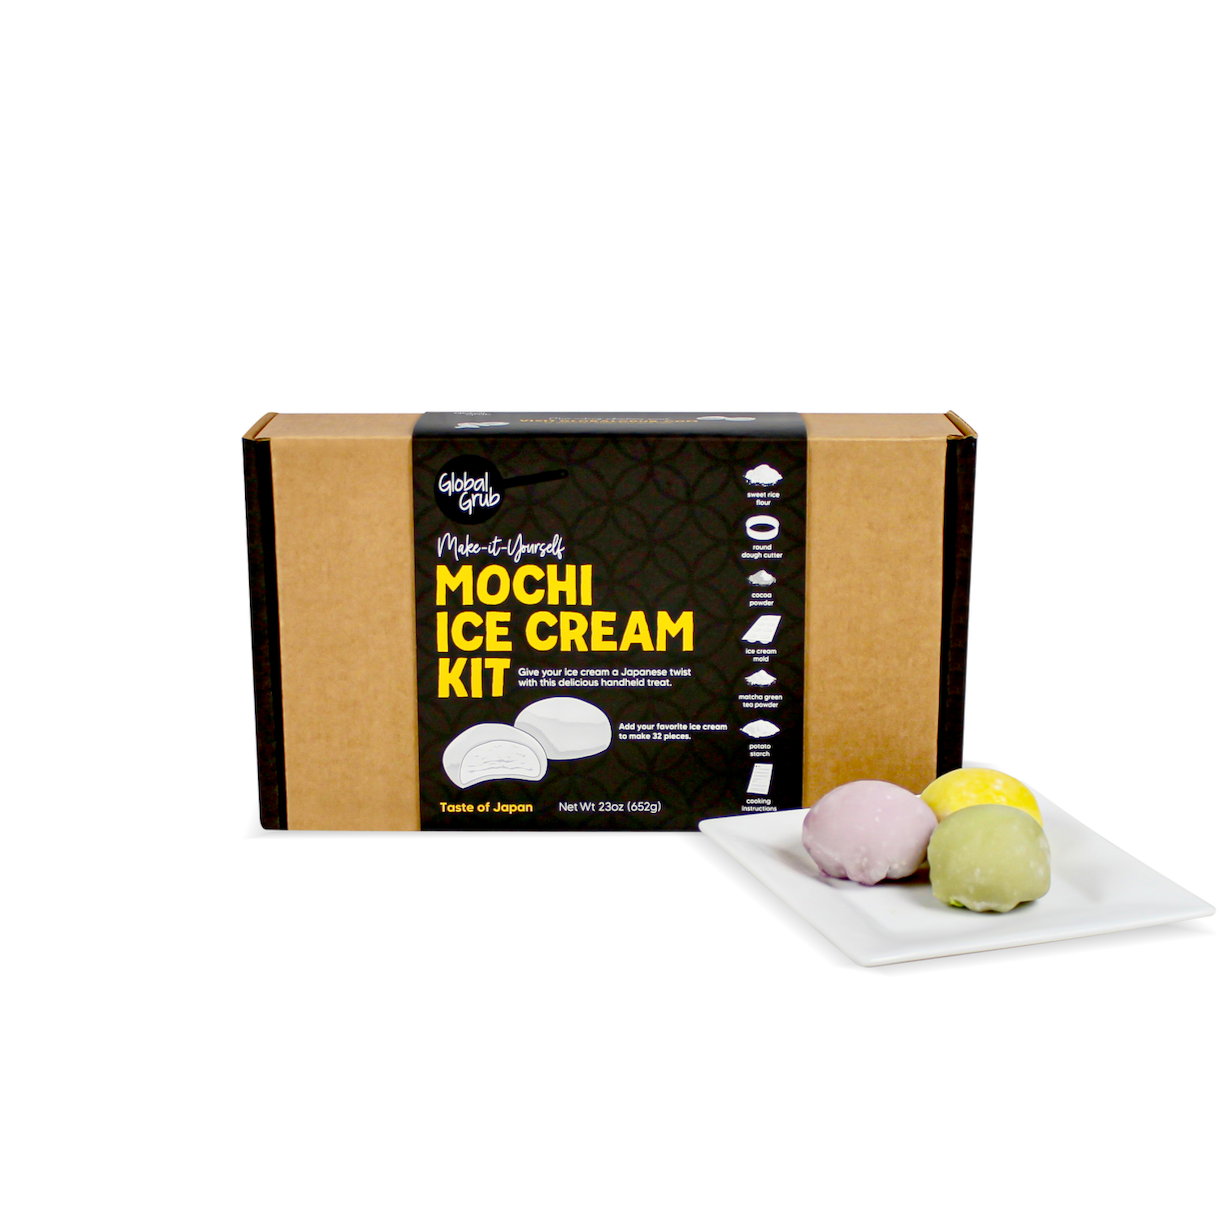 The DIY Mochi Ice Cream Kit Make Your Own Japanese Ice Cream Balls